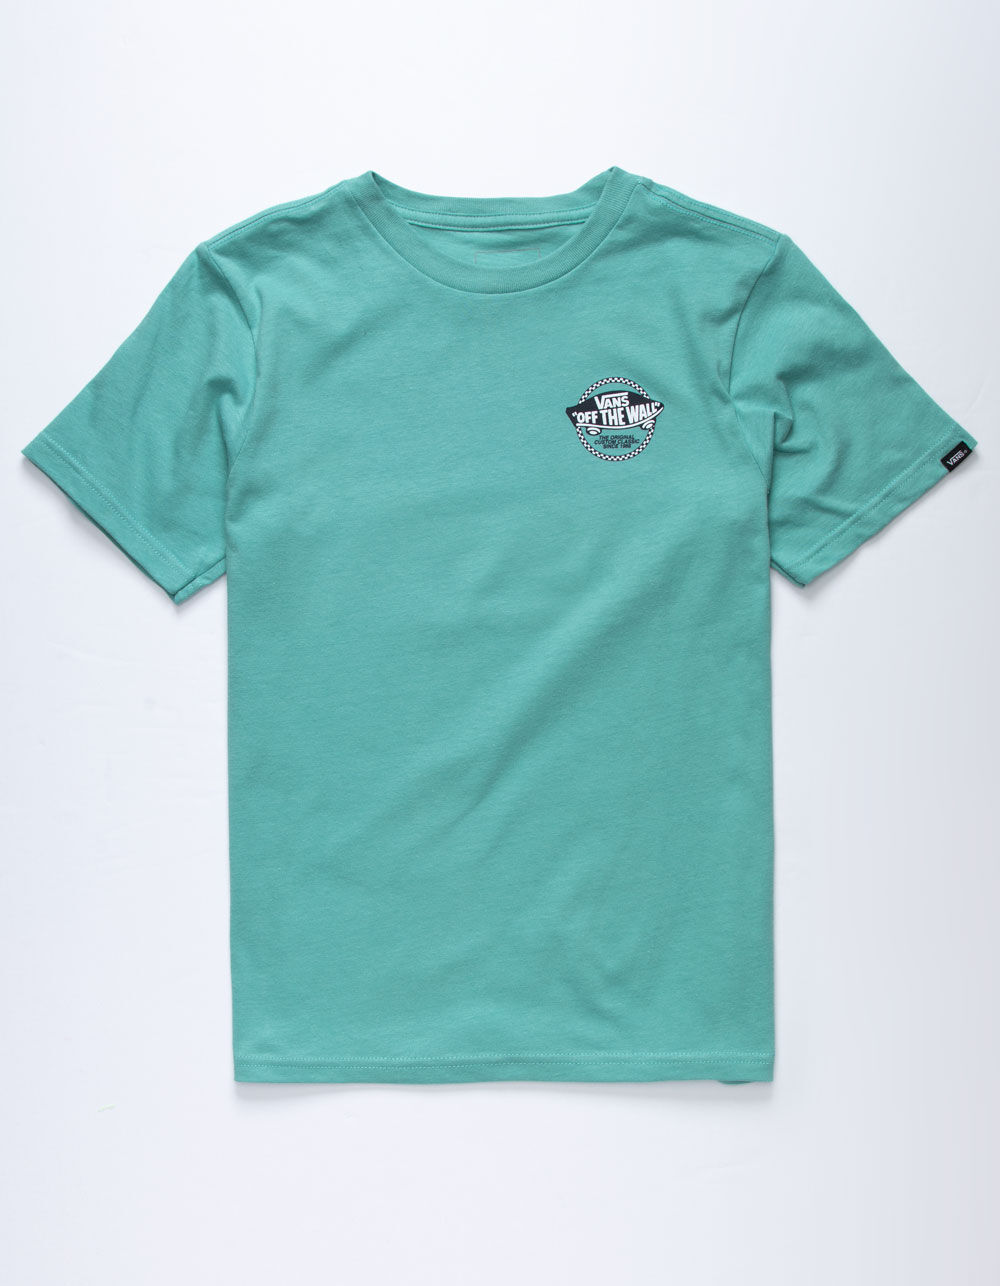 VANS Checker OTW Little Boys T-Shirt (4-7) - LIGHT GREEN | Tillys